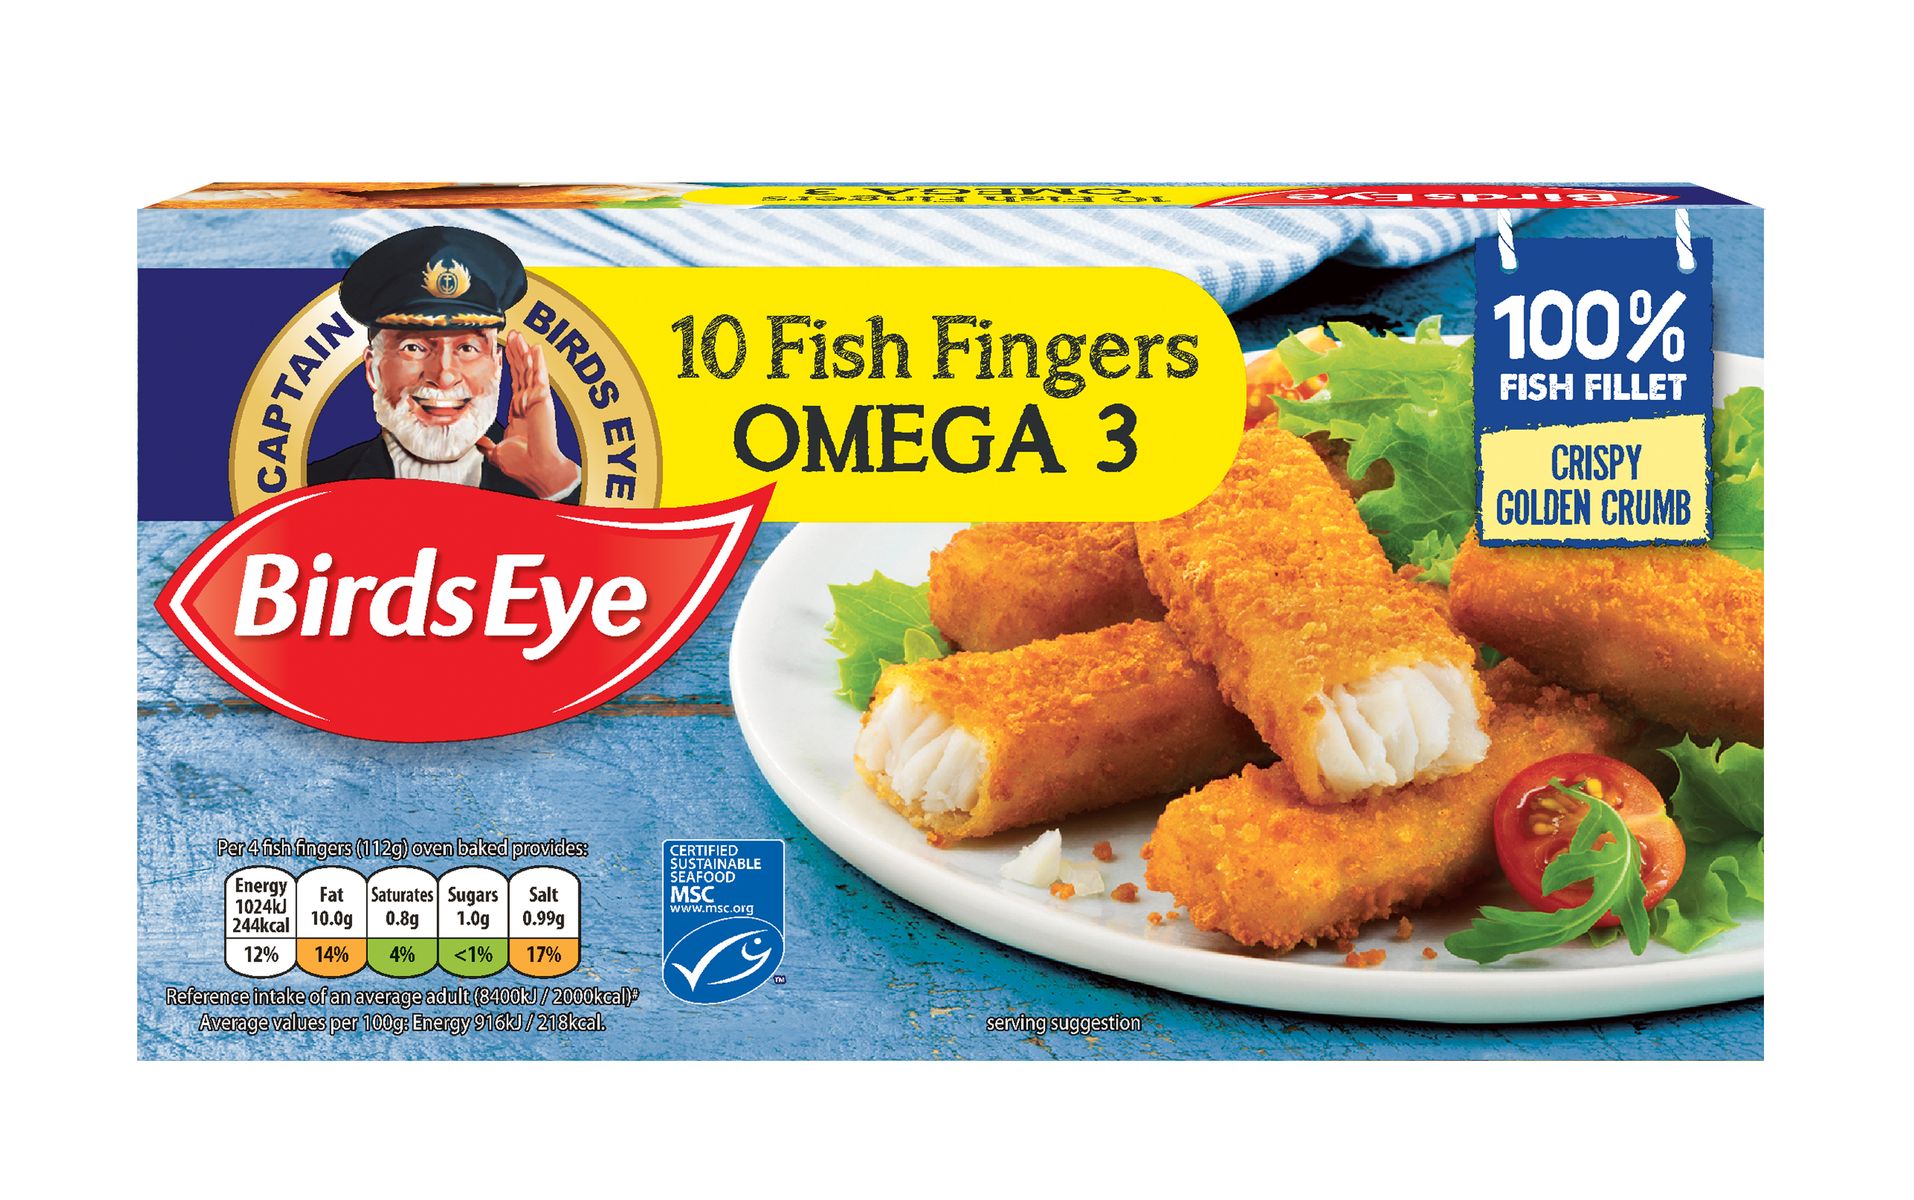 Birds Eye Fish Fingers 375g is halal suitable